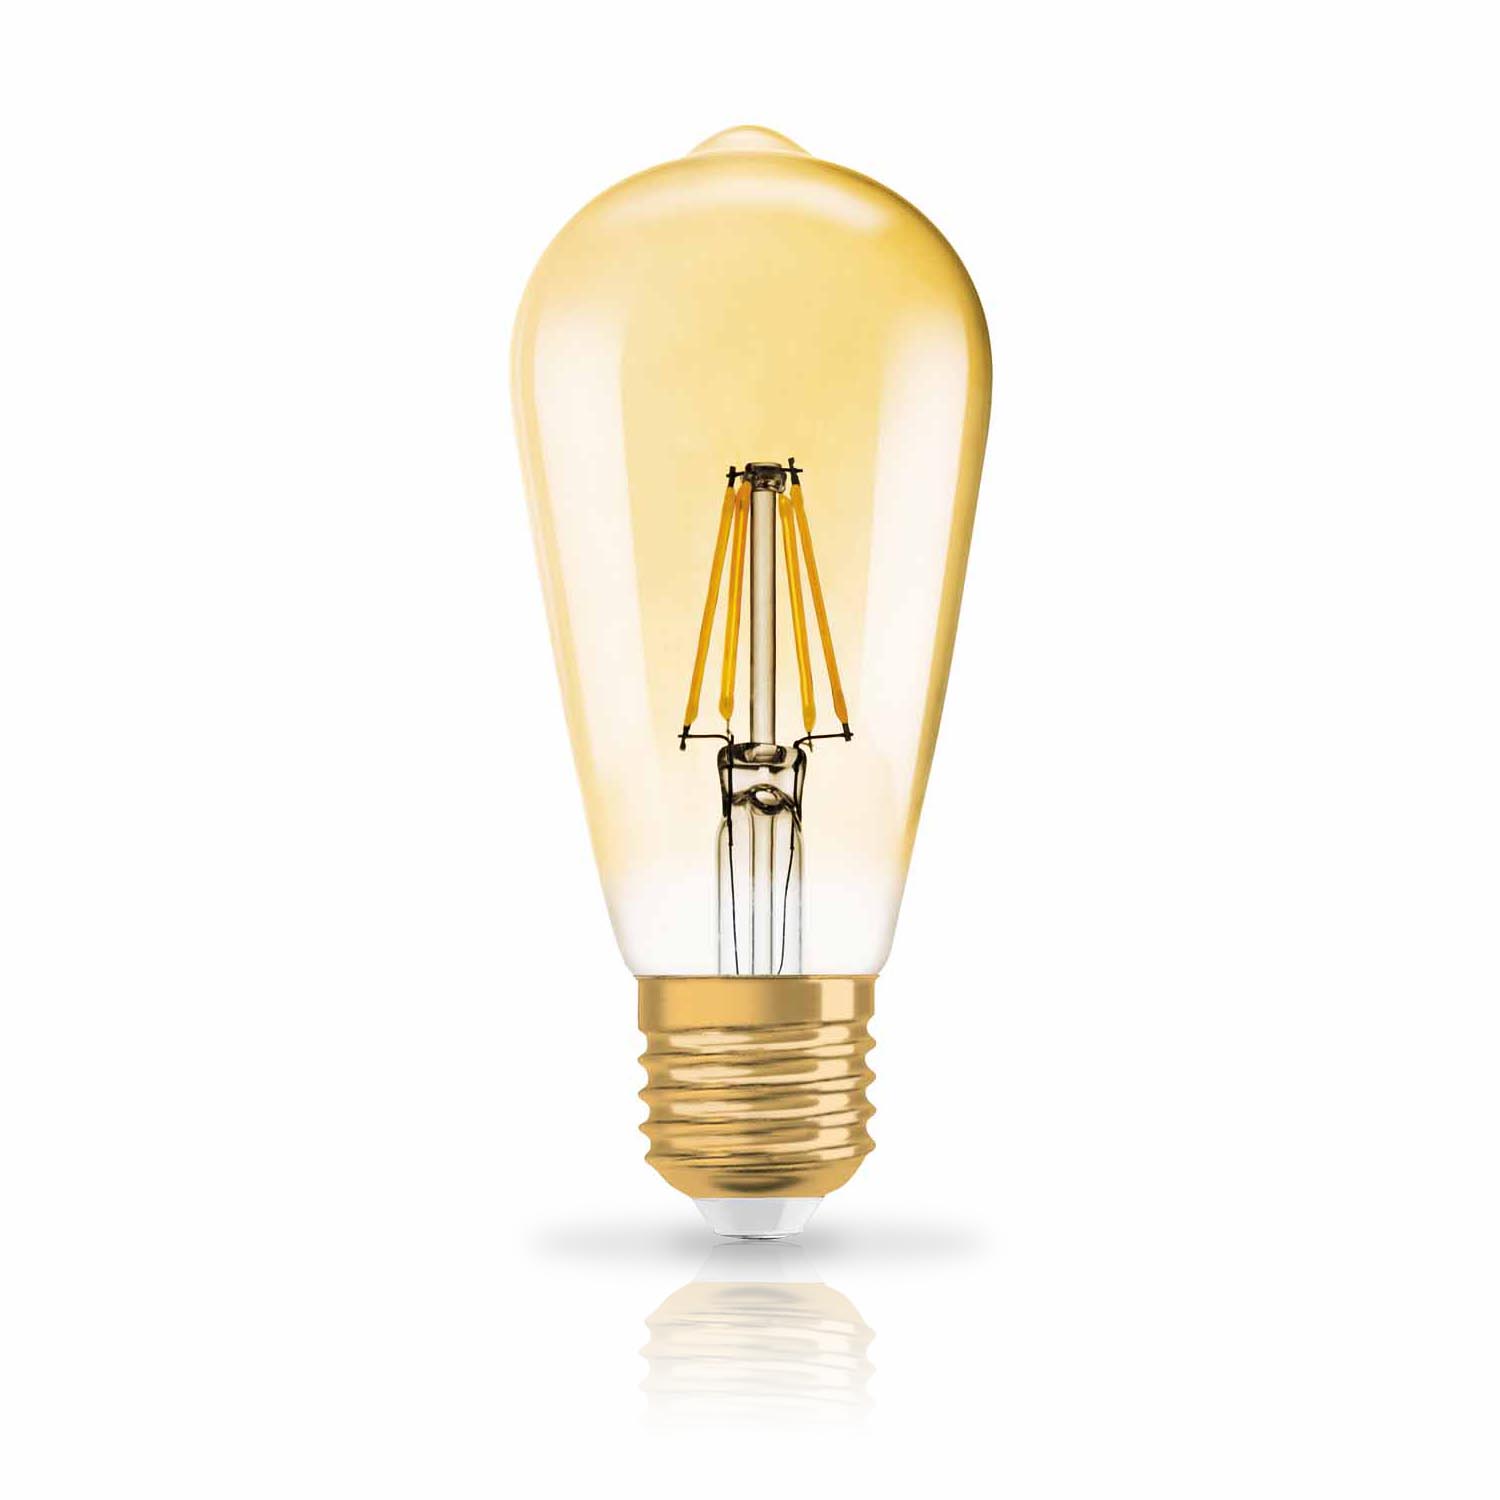 Bec LED Osram LED VINTAGE 1906 DIM CLASSIC EDISON 50 65W 824 E27 GOLD 2400K 710lm